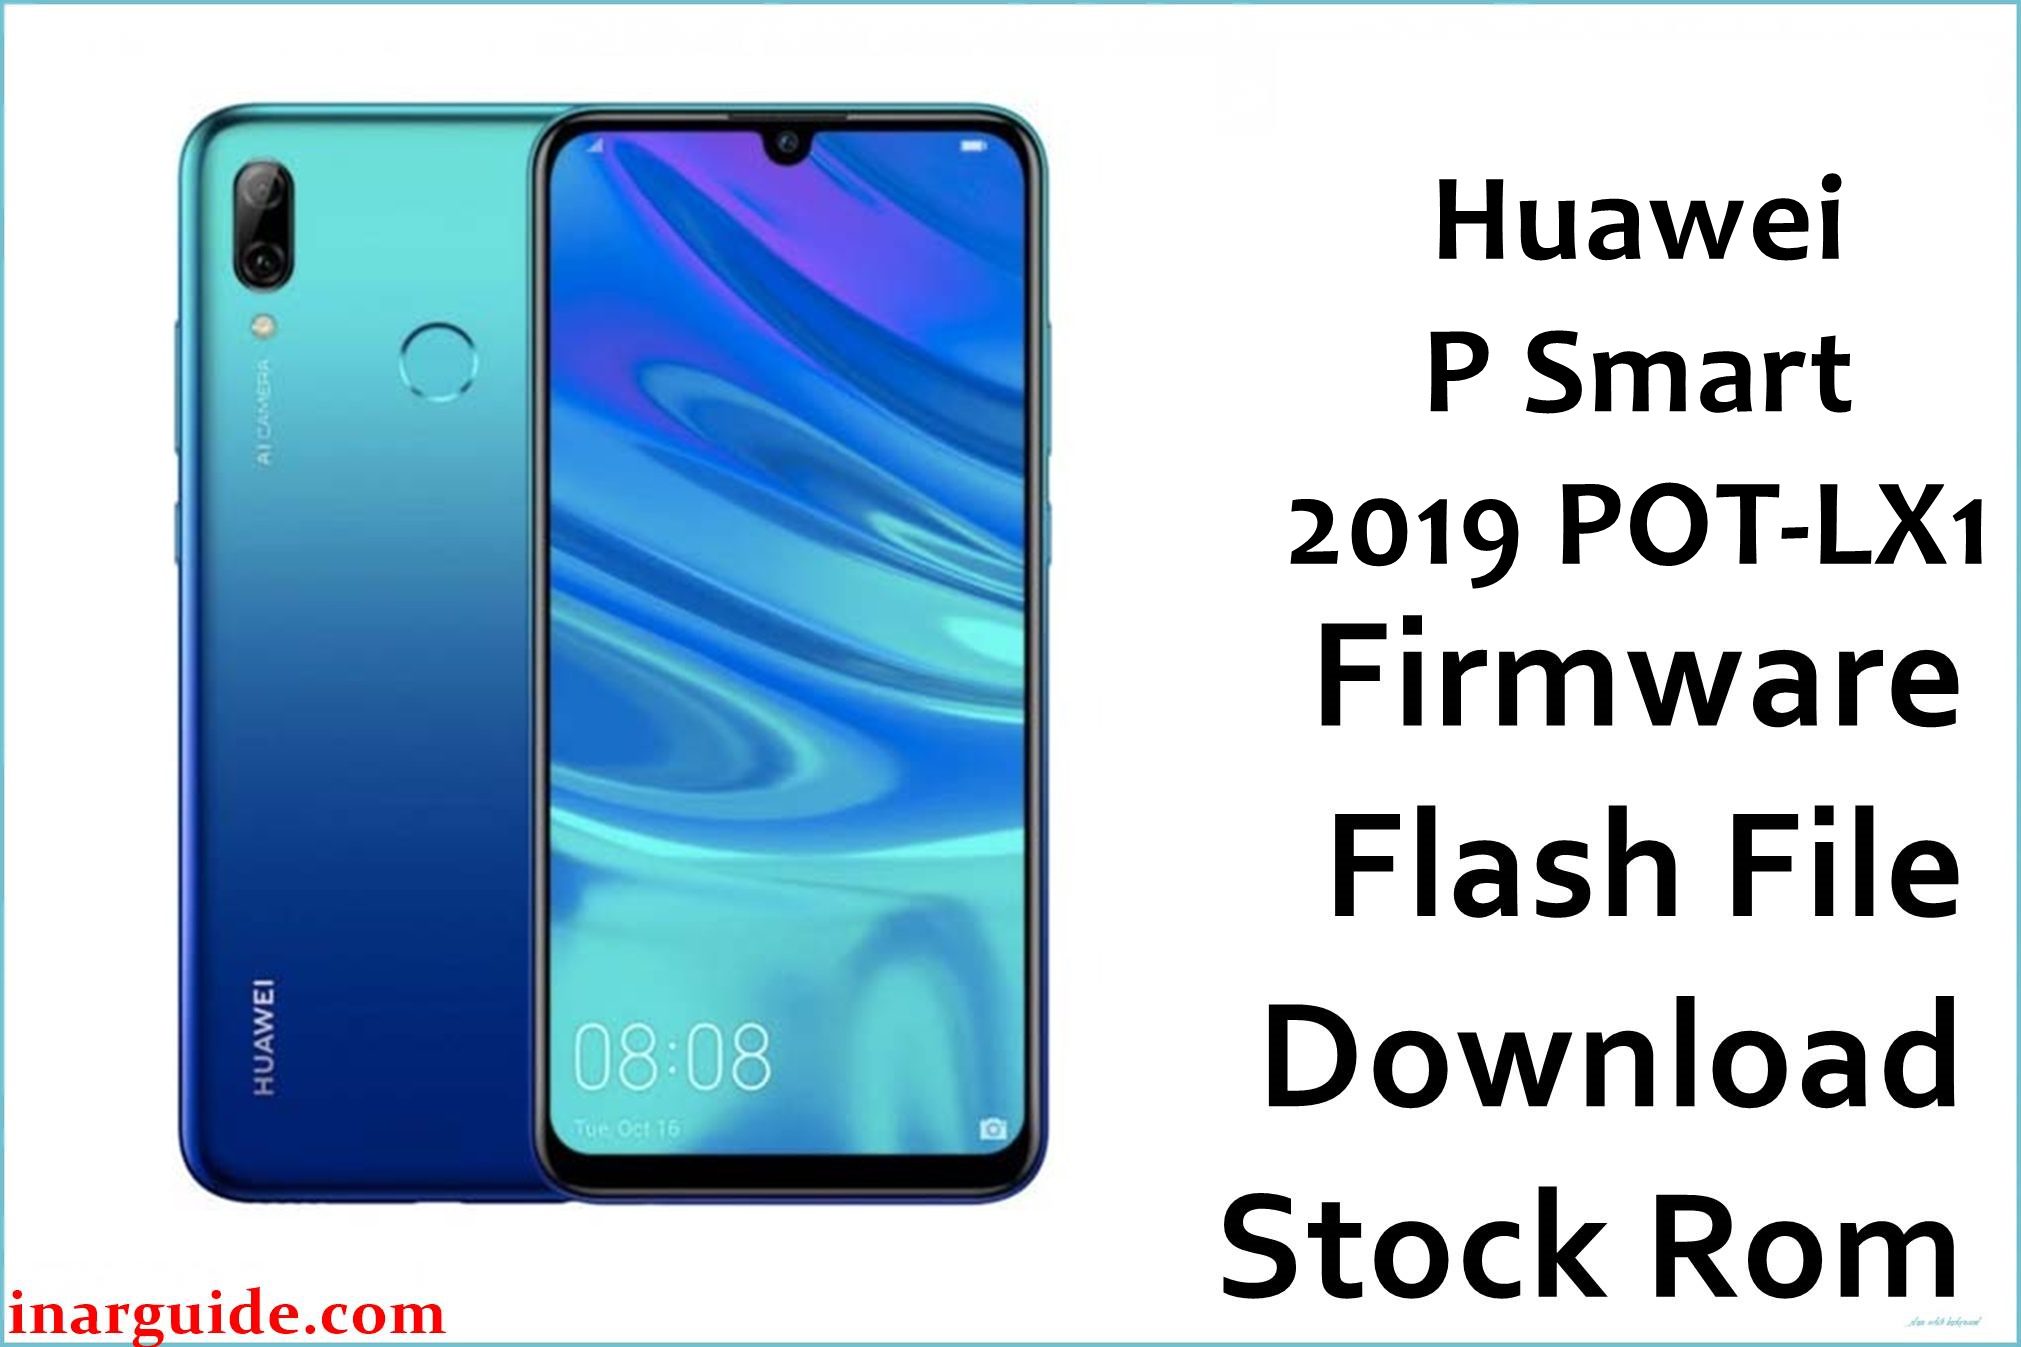 Huawei P Smart 2019 POT LX1